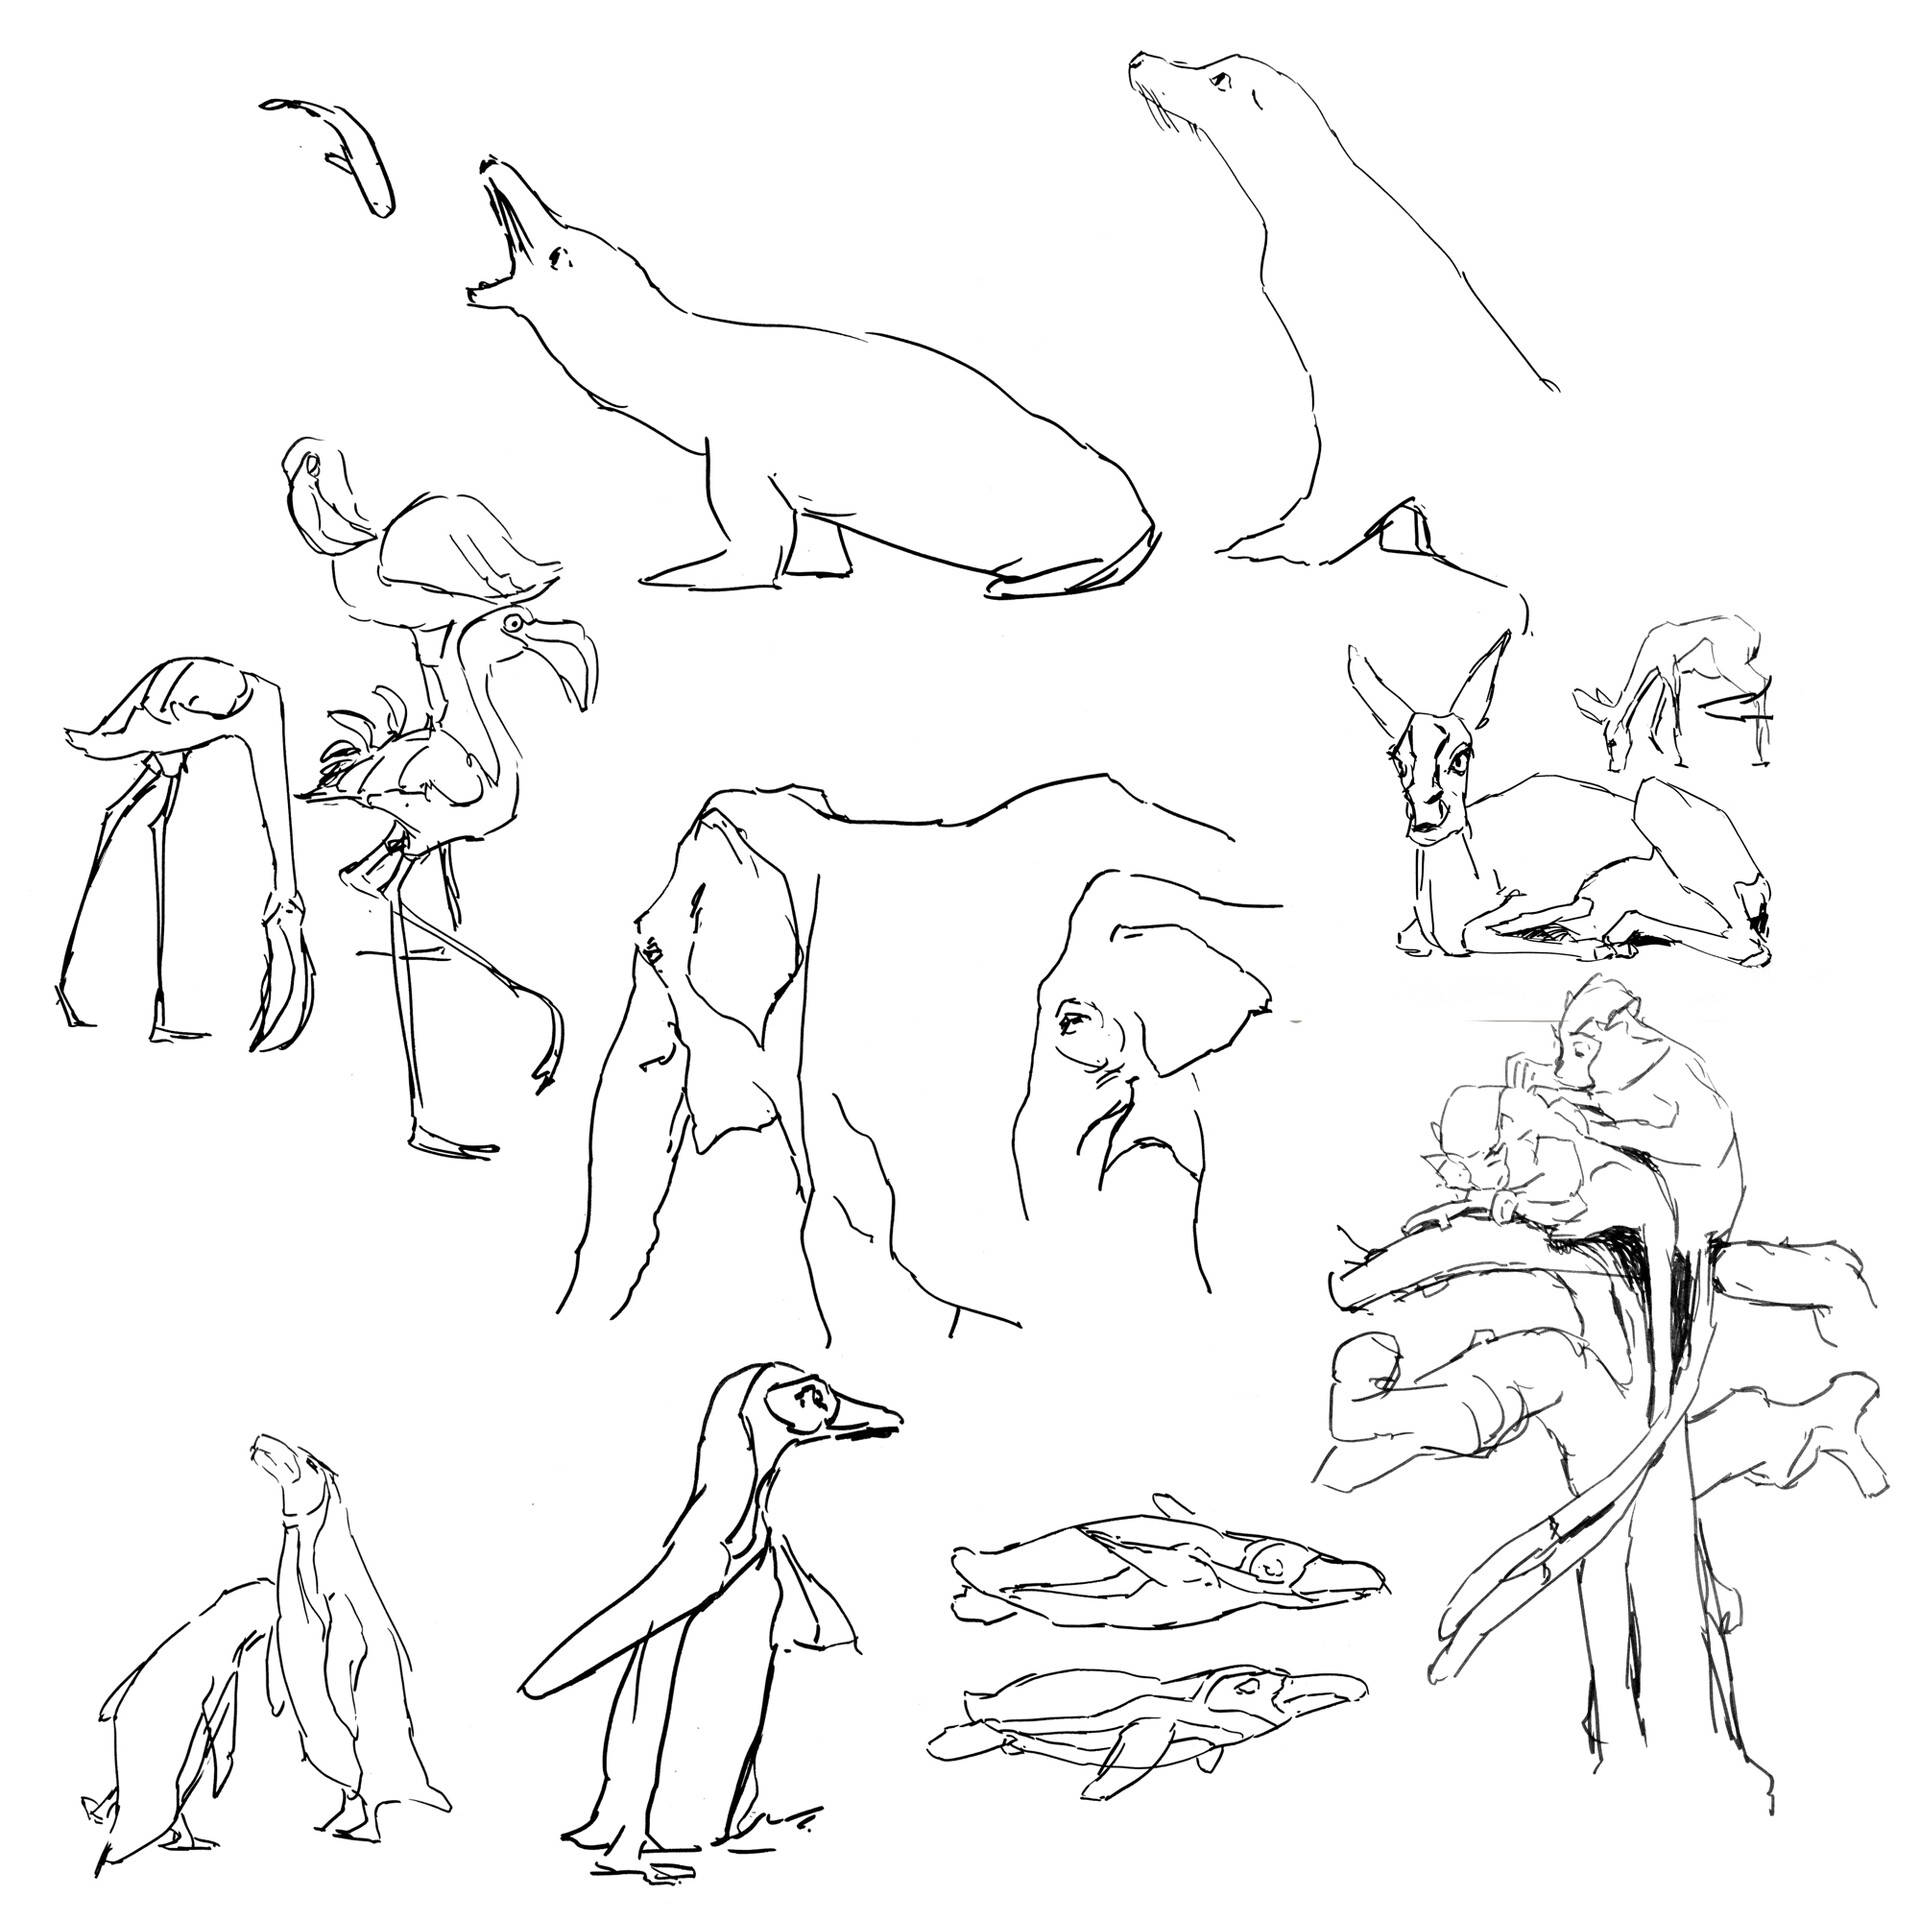 ArtStation - Zoo Sketches